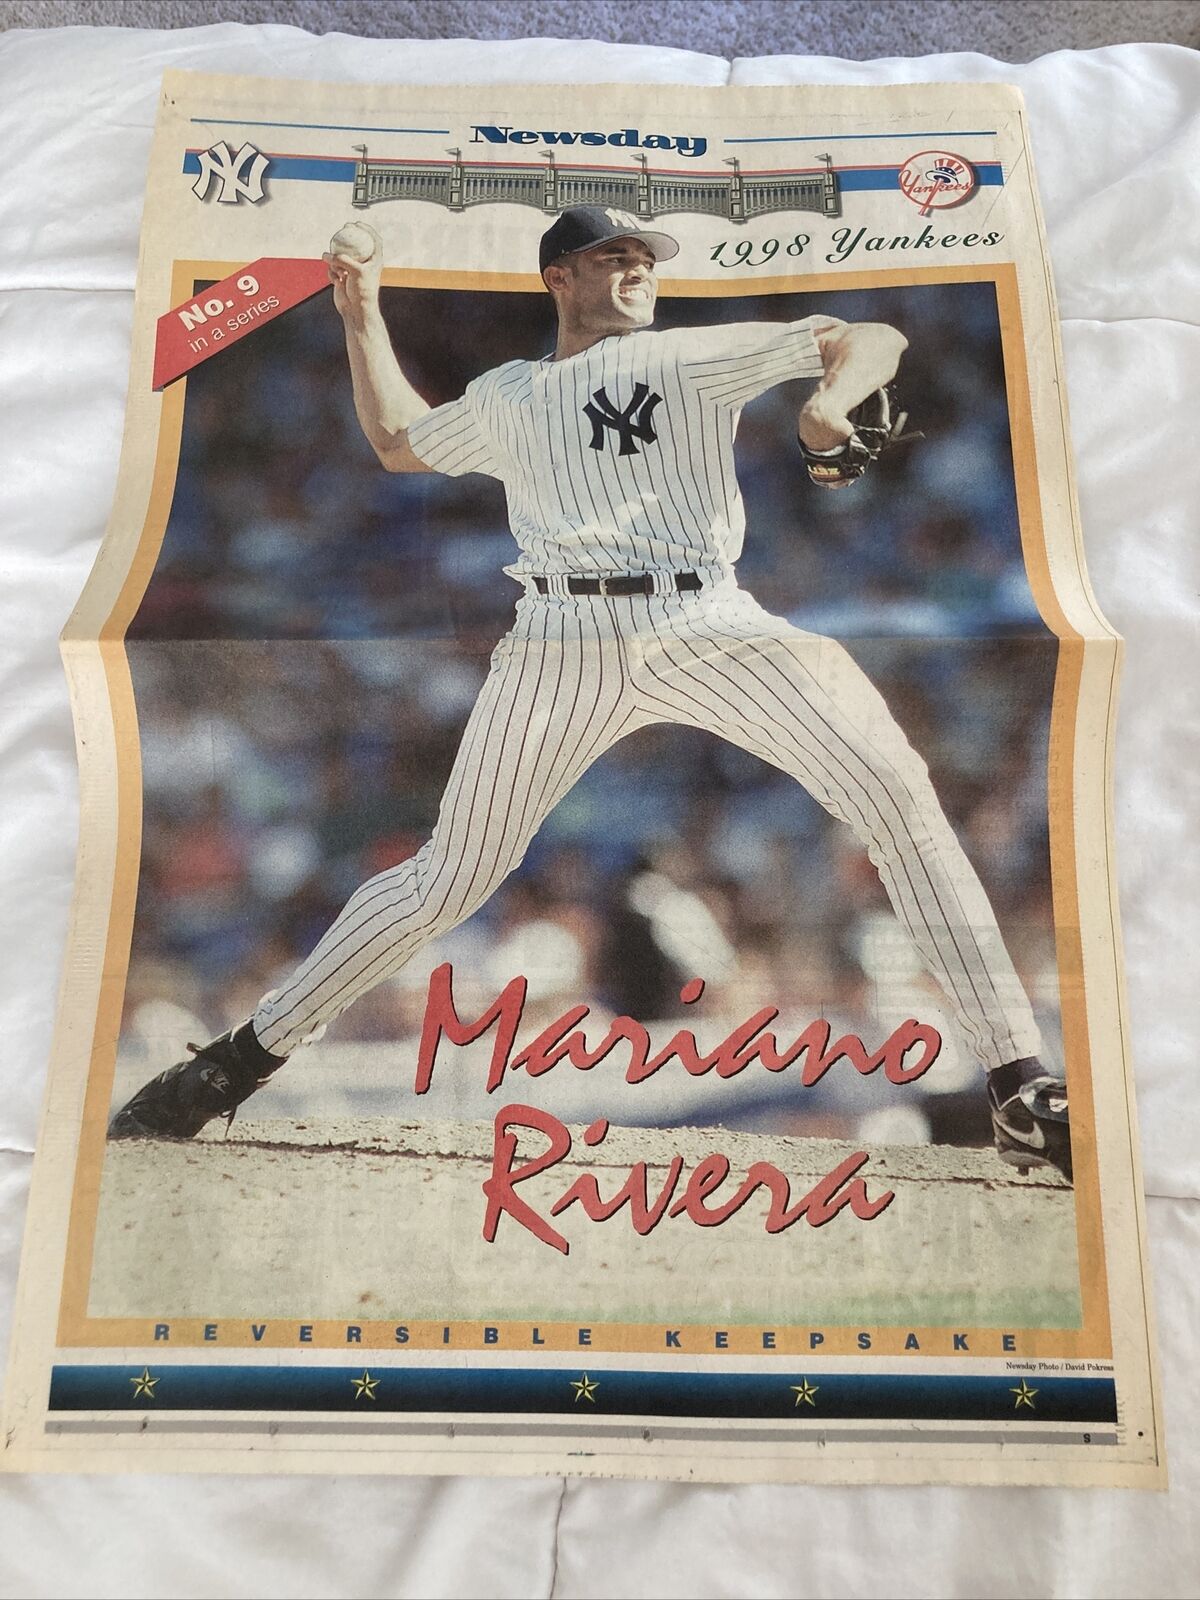 Newsday 1998 Yankees Reversible Keepsake Mariano Rivera- No. 9 In A Series NM-MT